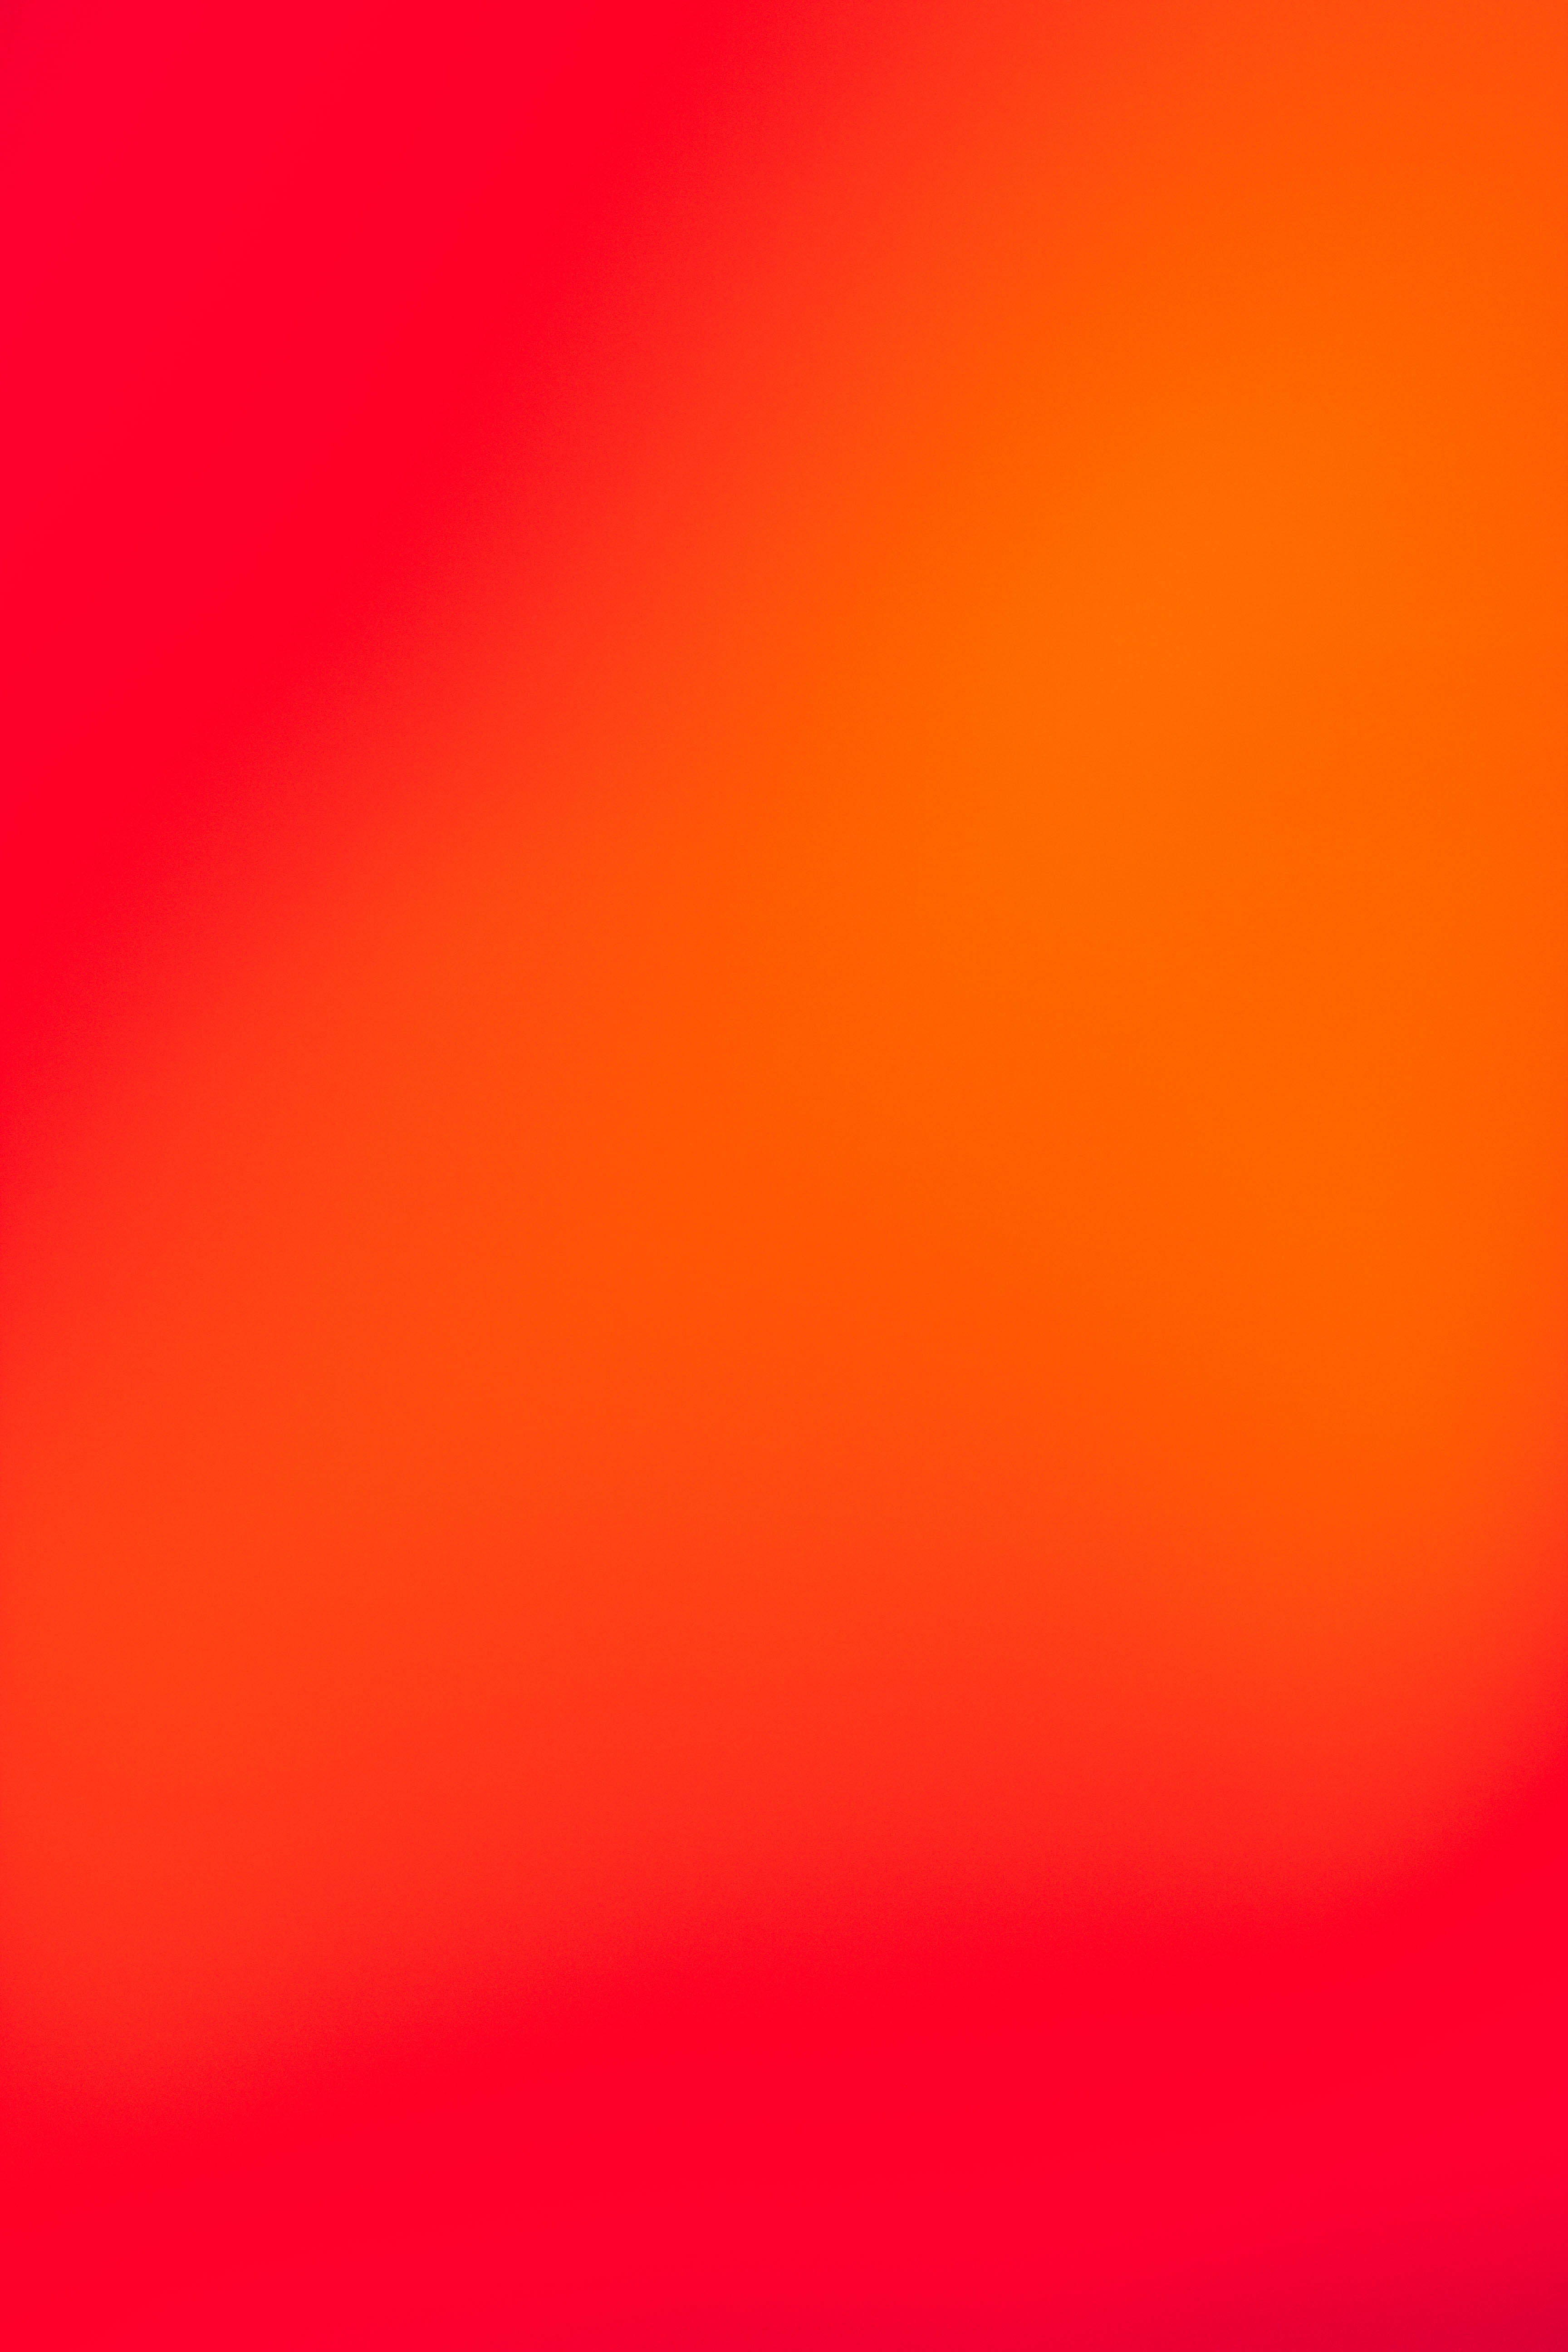 Popular Orange Image for Phone